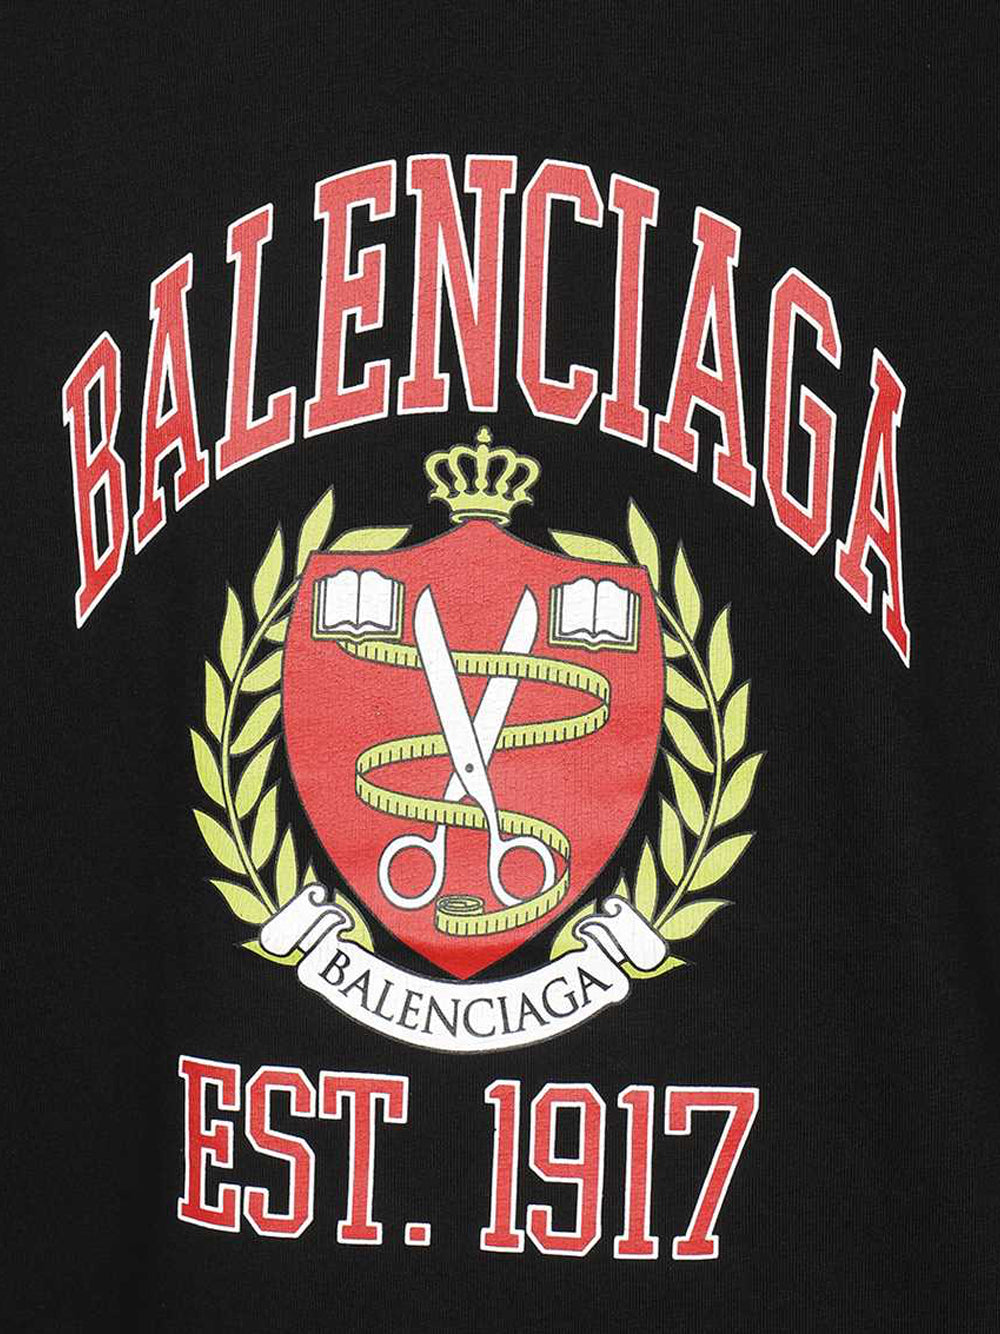 BALENCIAGA College Medium Fit T-Shirt Black - MAISONDEFASHION.COM